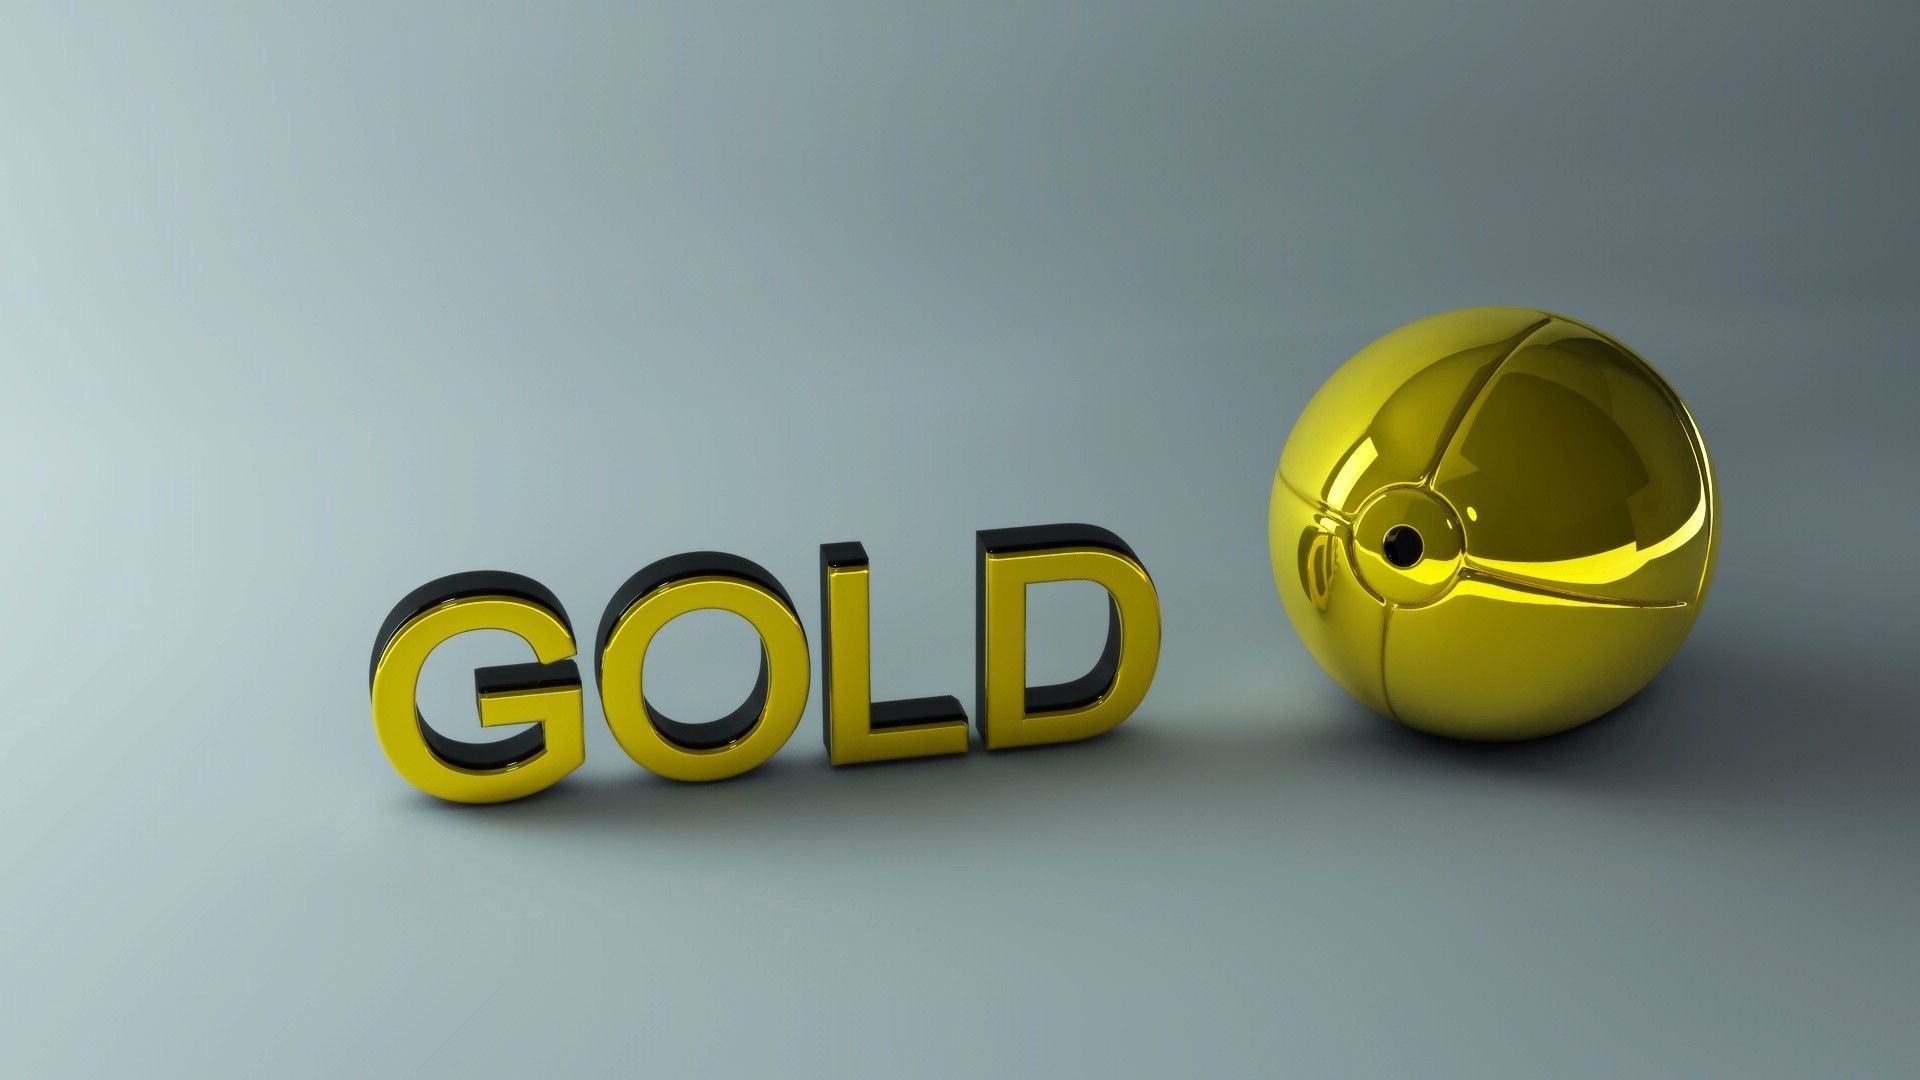 gold, ball, words, letters Image for desktop